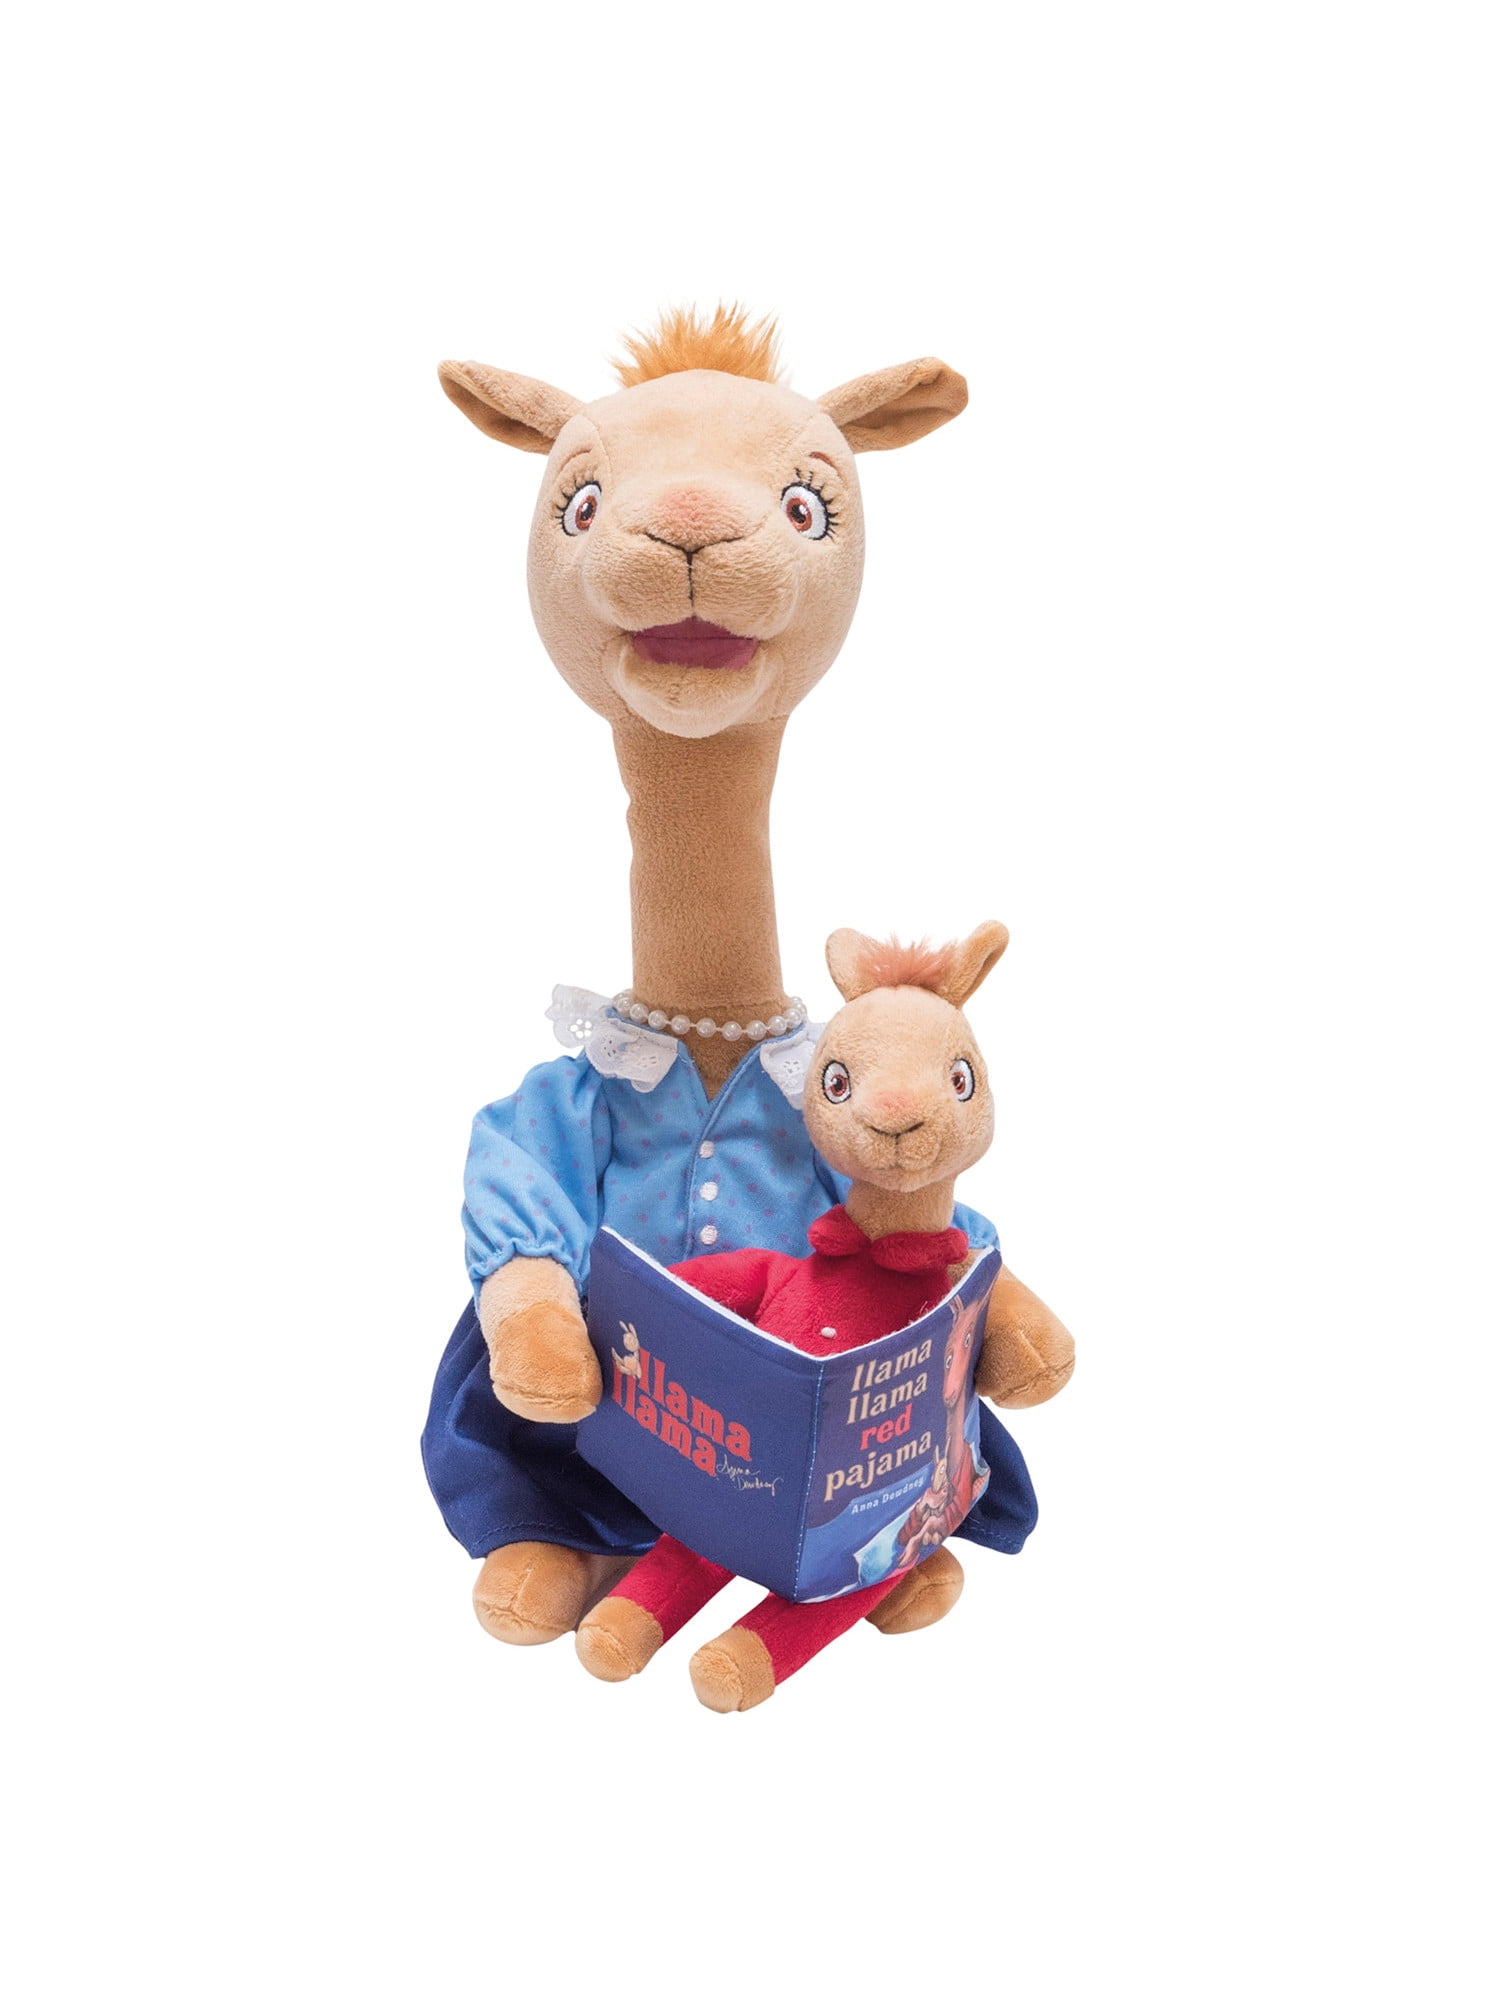 llama plush toy